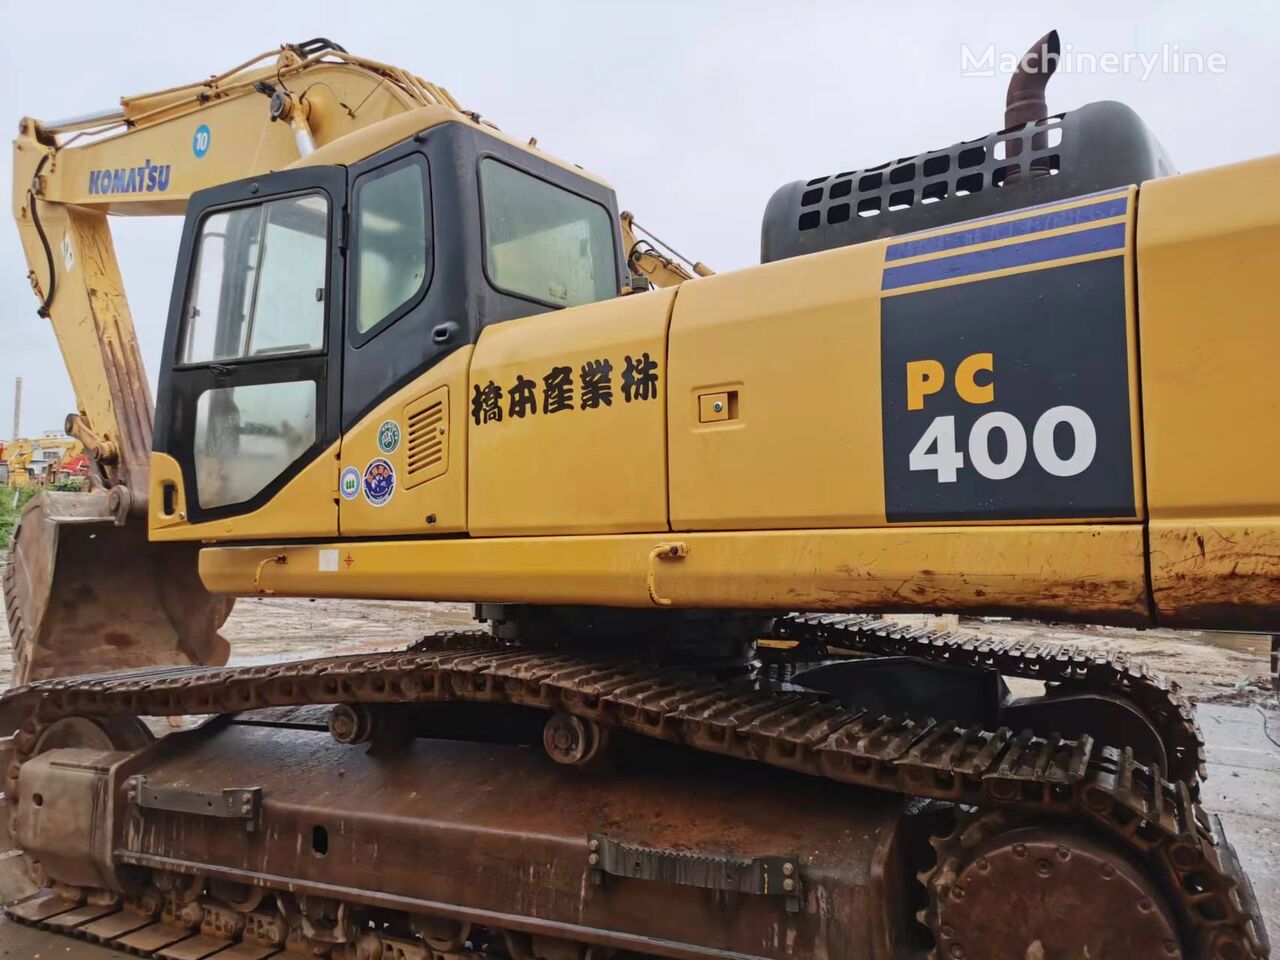 Komatsu PC400-7 tracked excavator